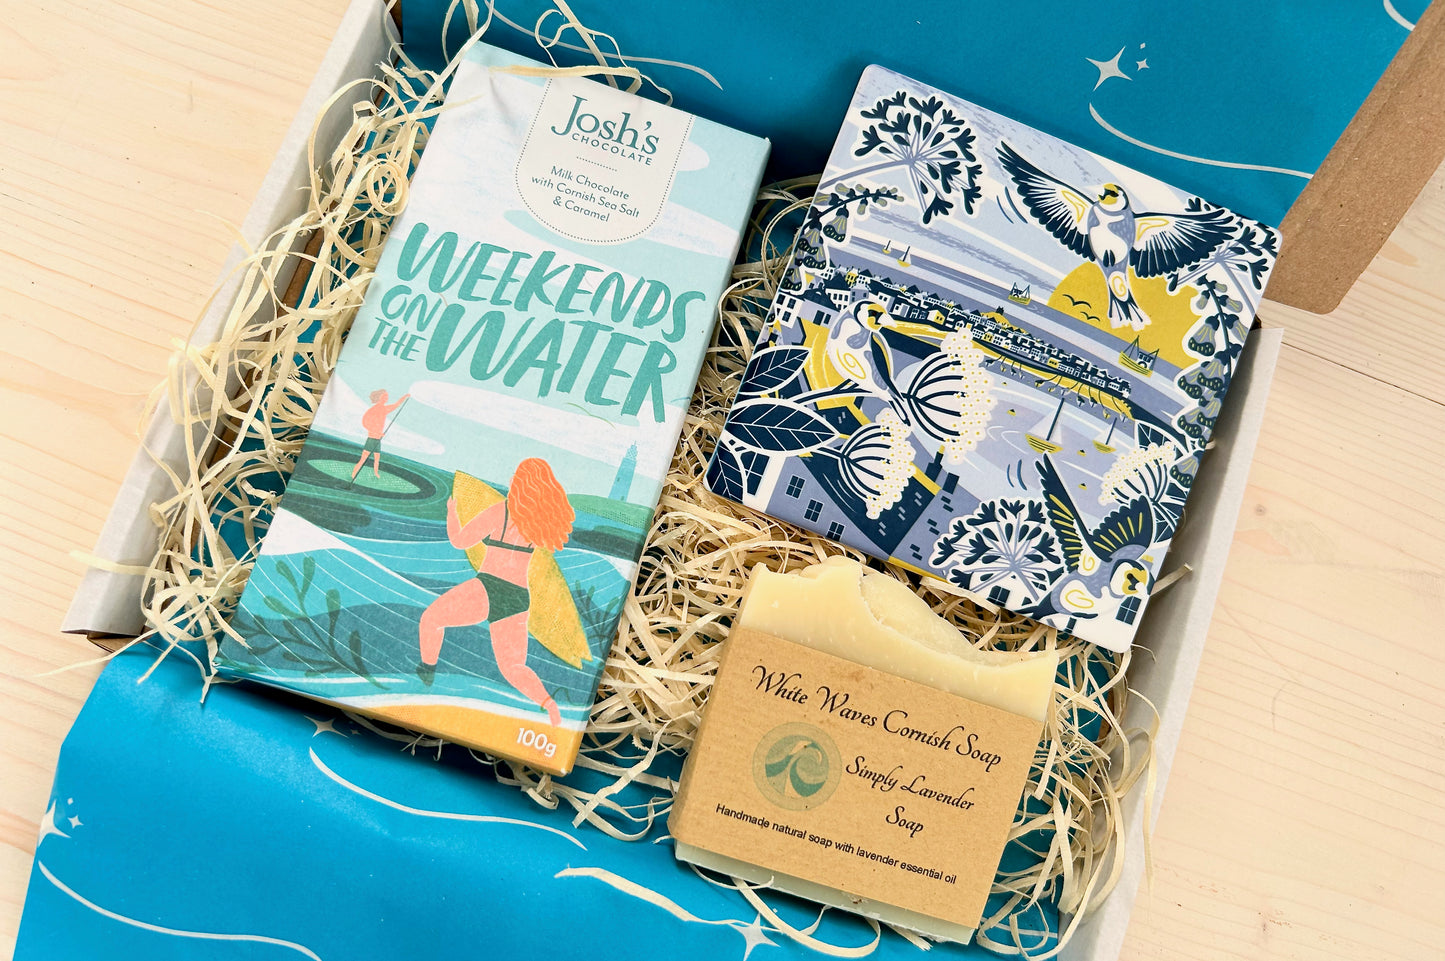 Cornish Gifts_Cornish Gift Set, Beach themed gift set, letterbox friendly with Cornish soap, Cornish illustrated coaster and Cornish chocolate